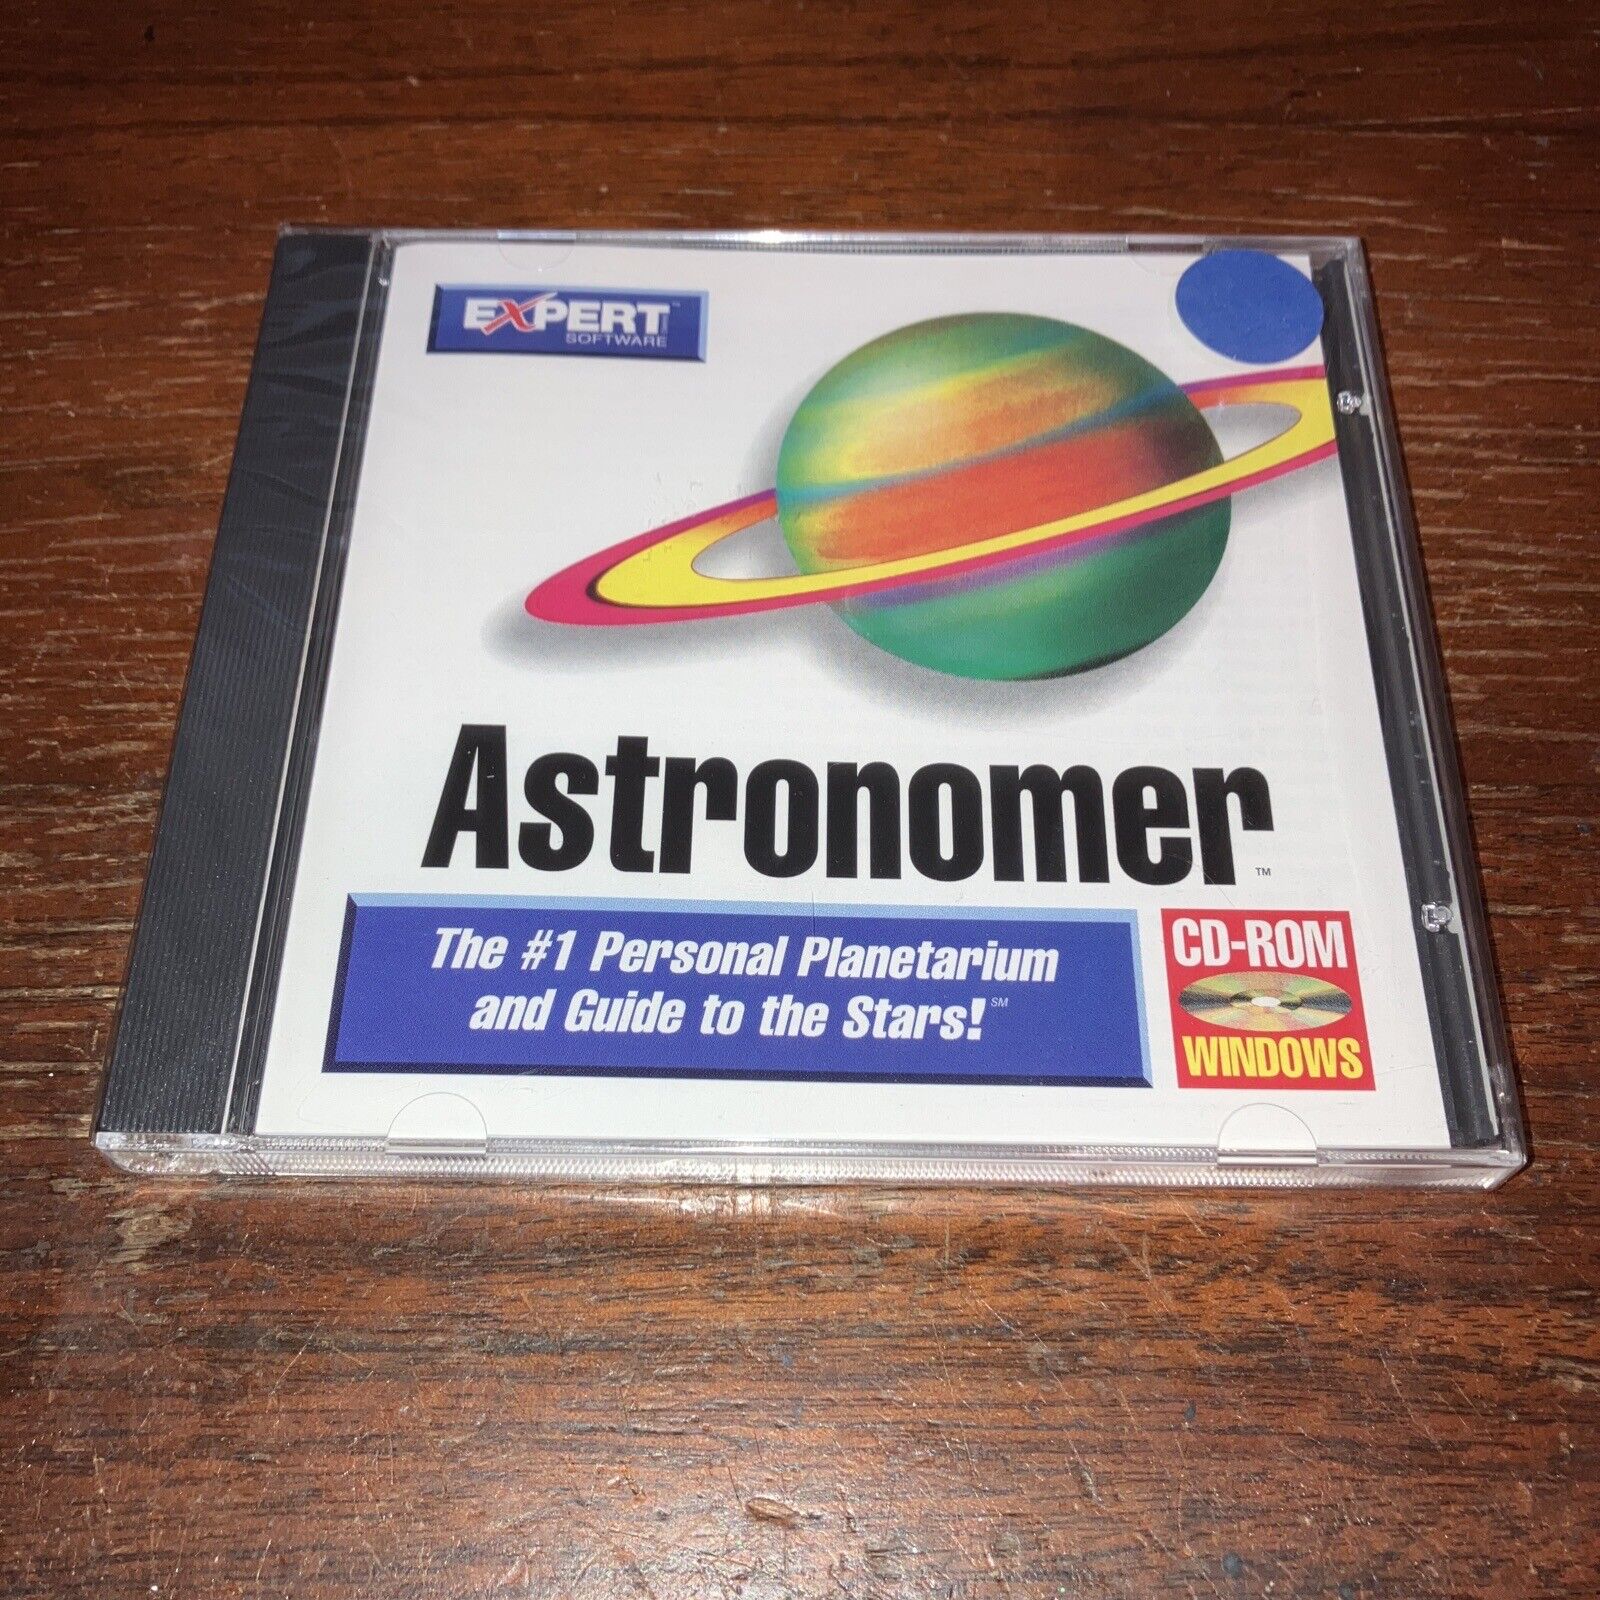 Astronomer - 1995 Expert Software CD-ROM Windows 3.1 - New Sealed Jewel Case